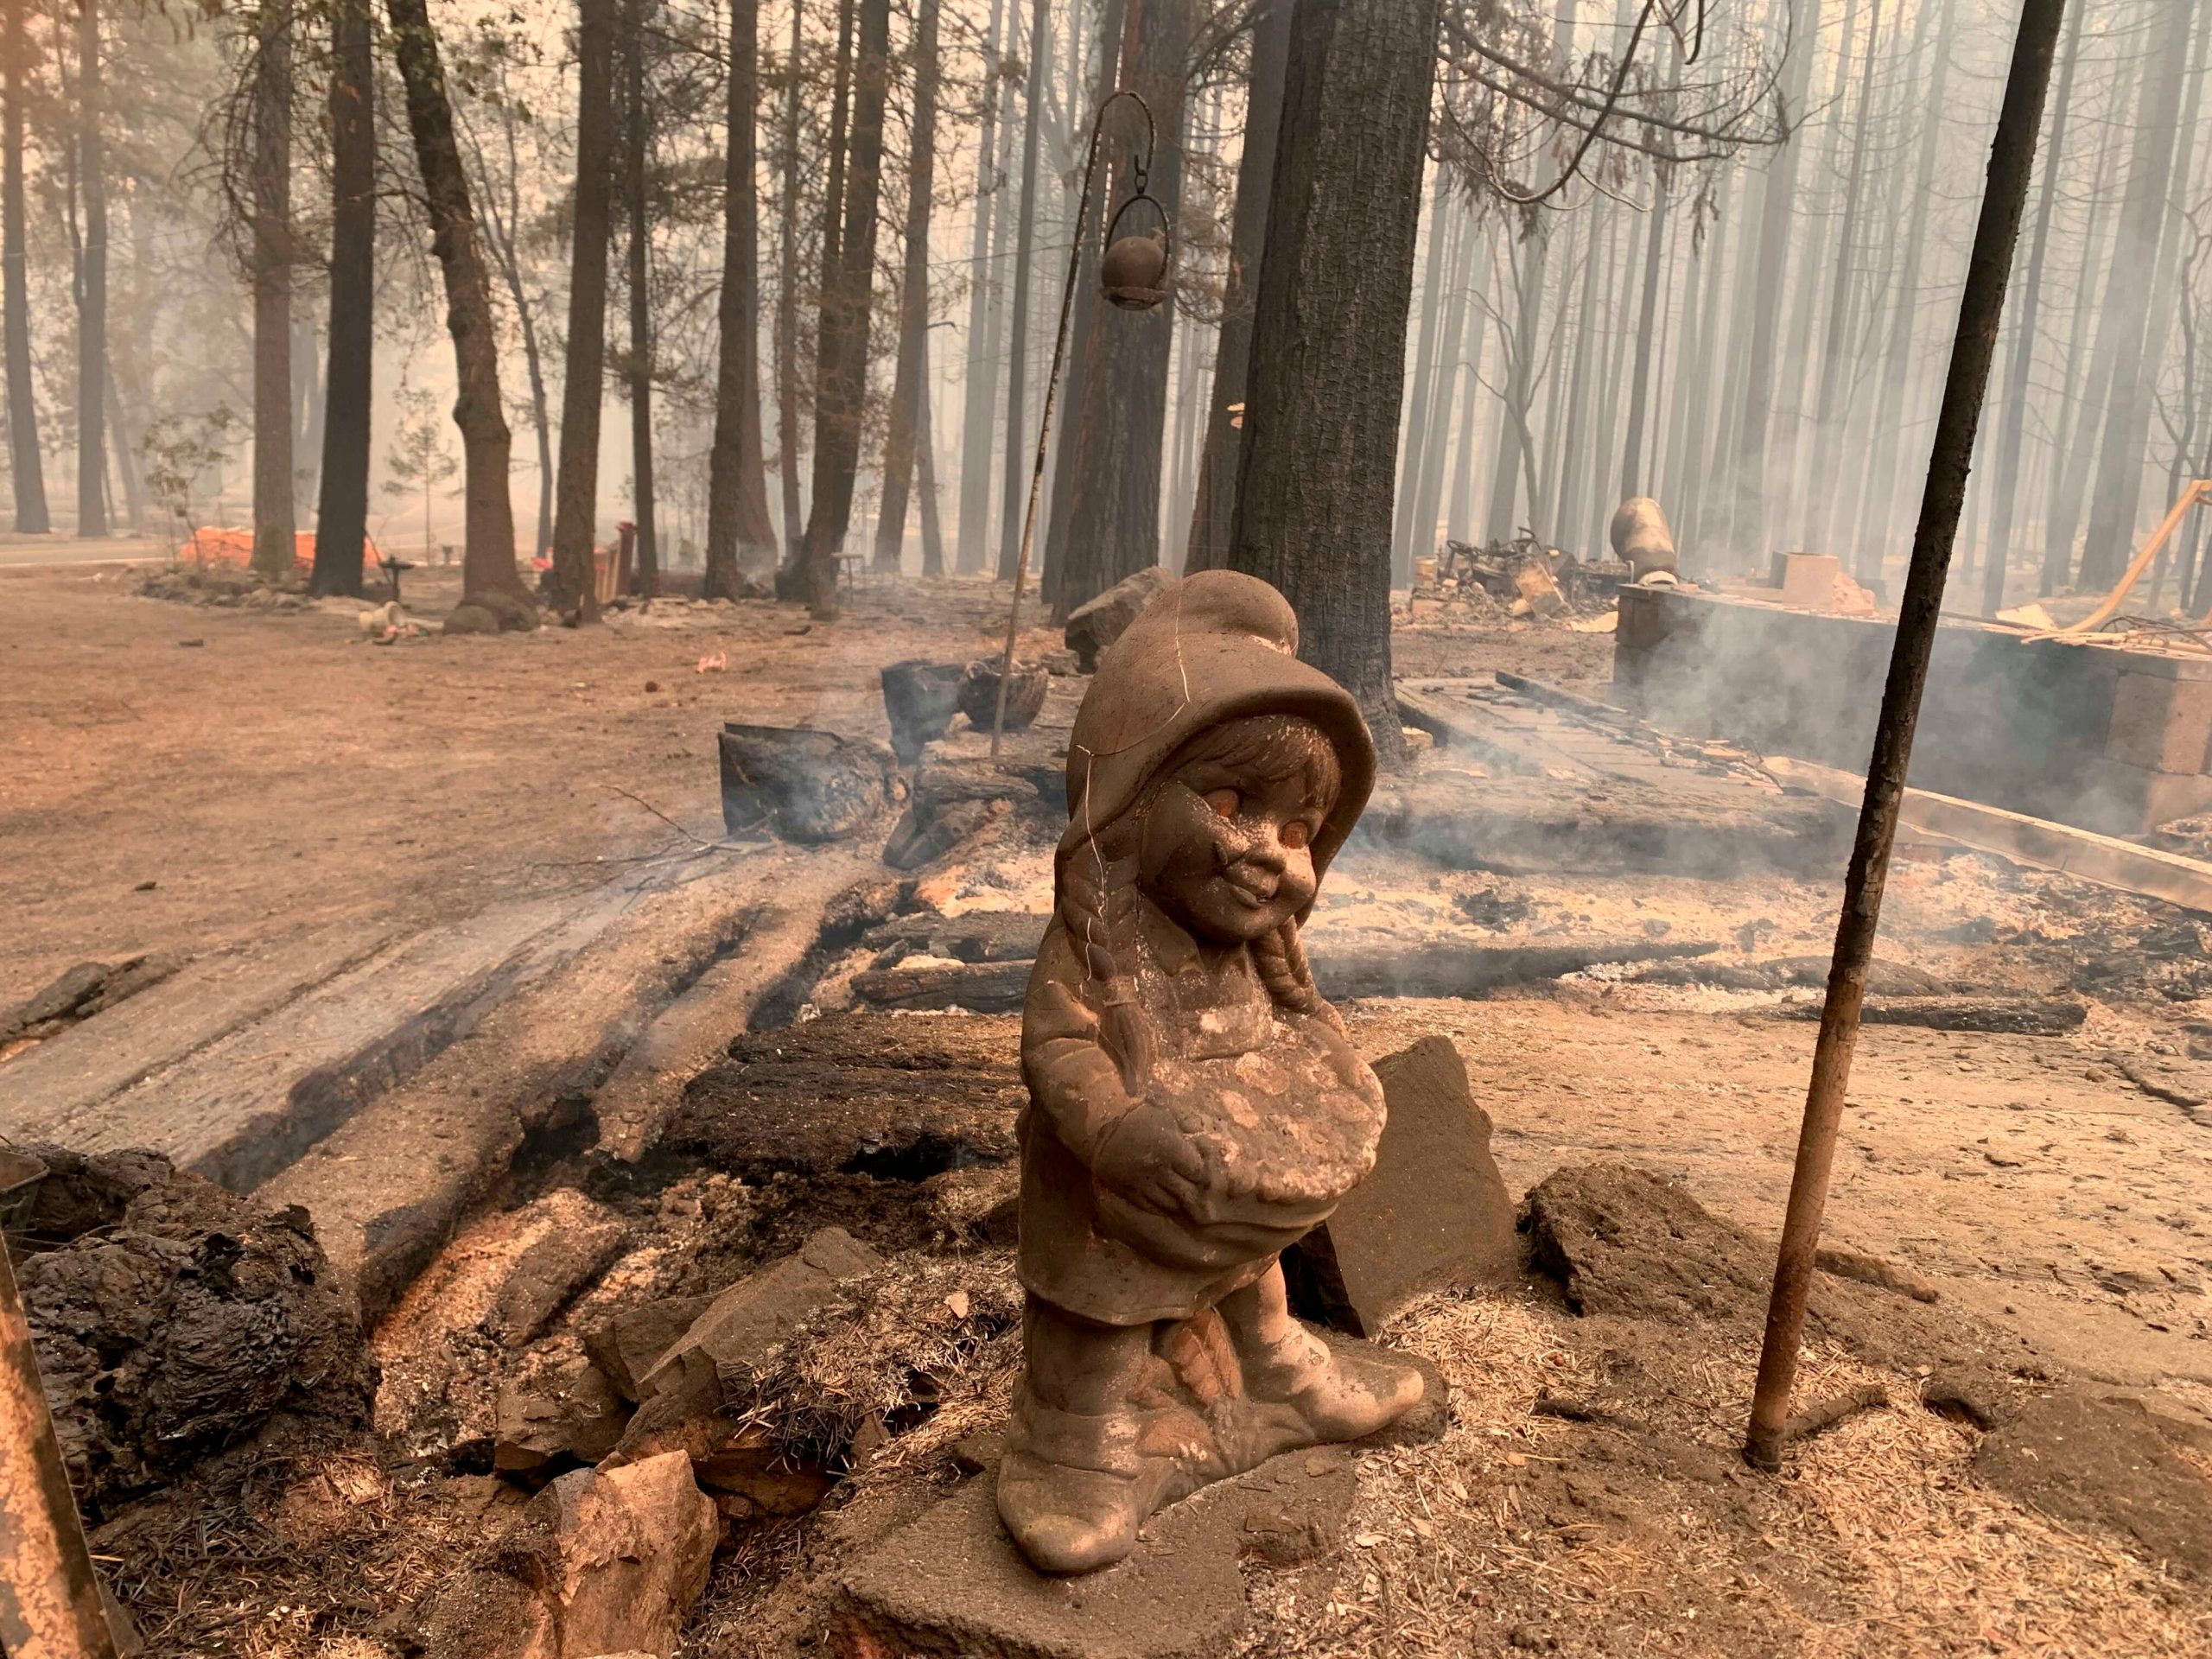 California wildfire threatens homes as blazes burn across West